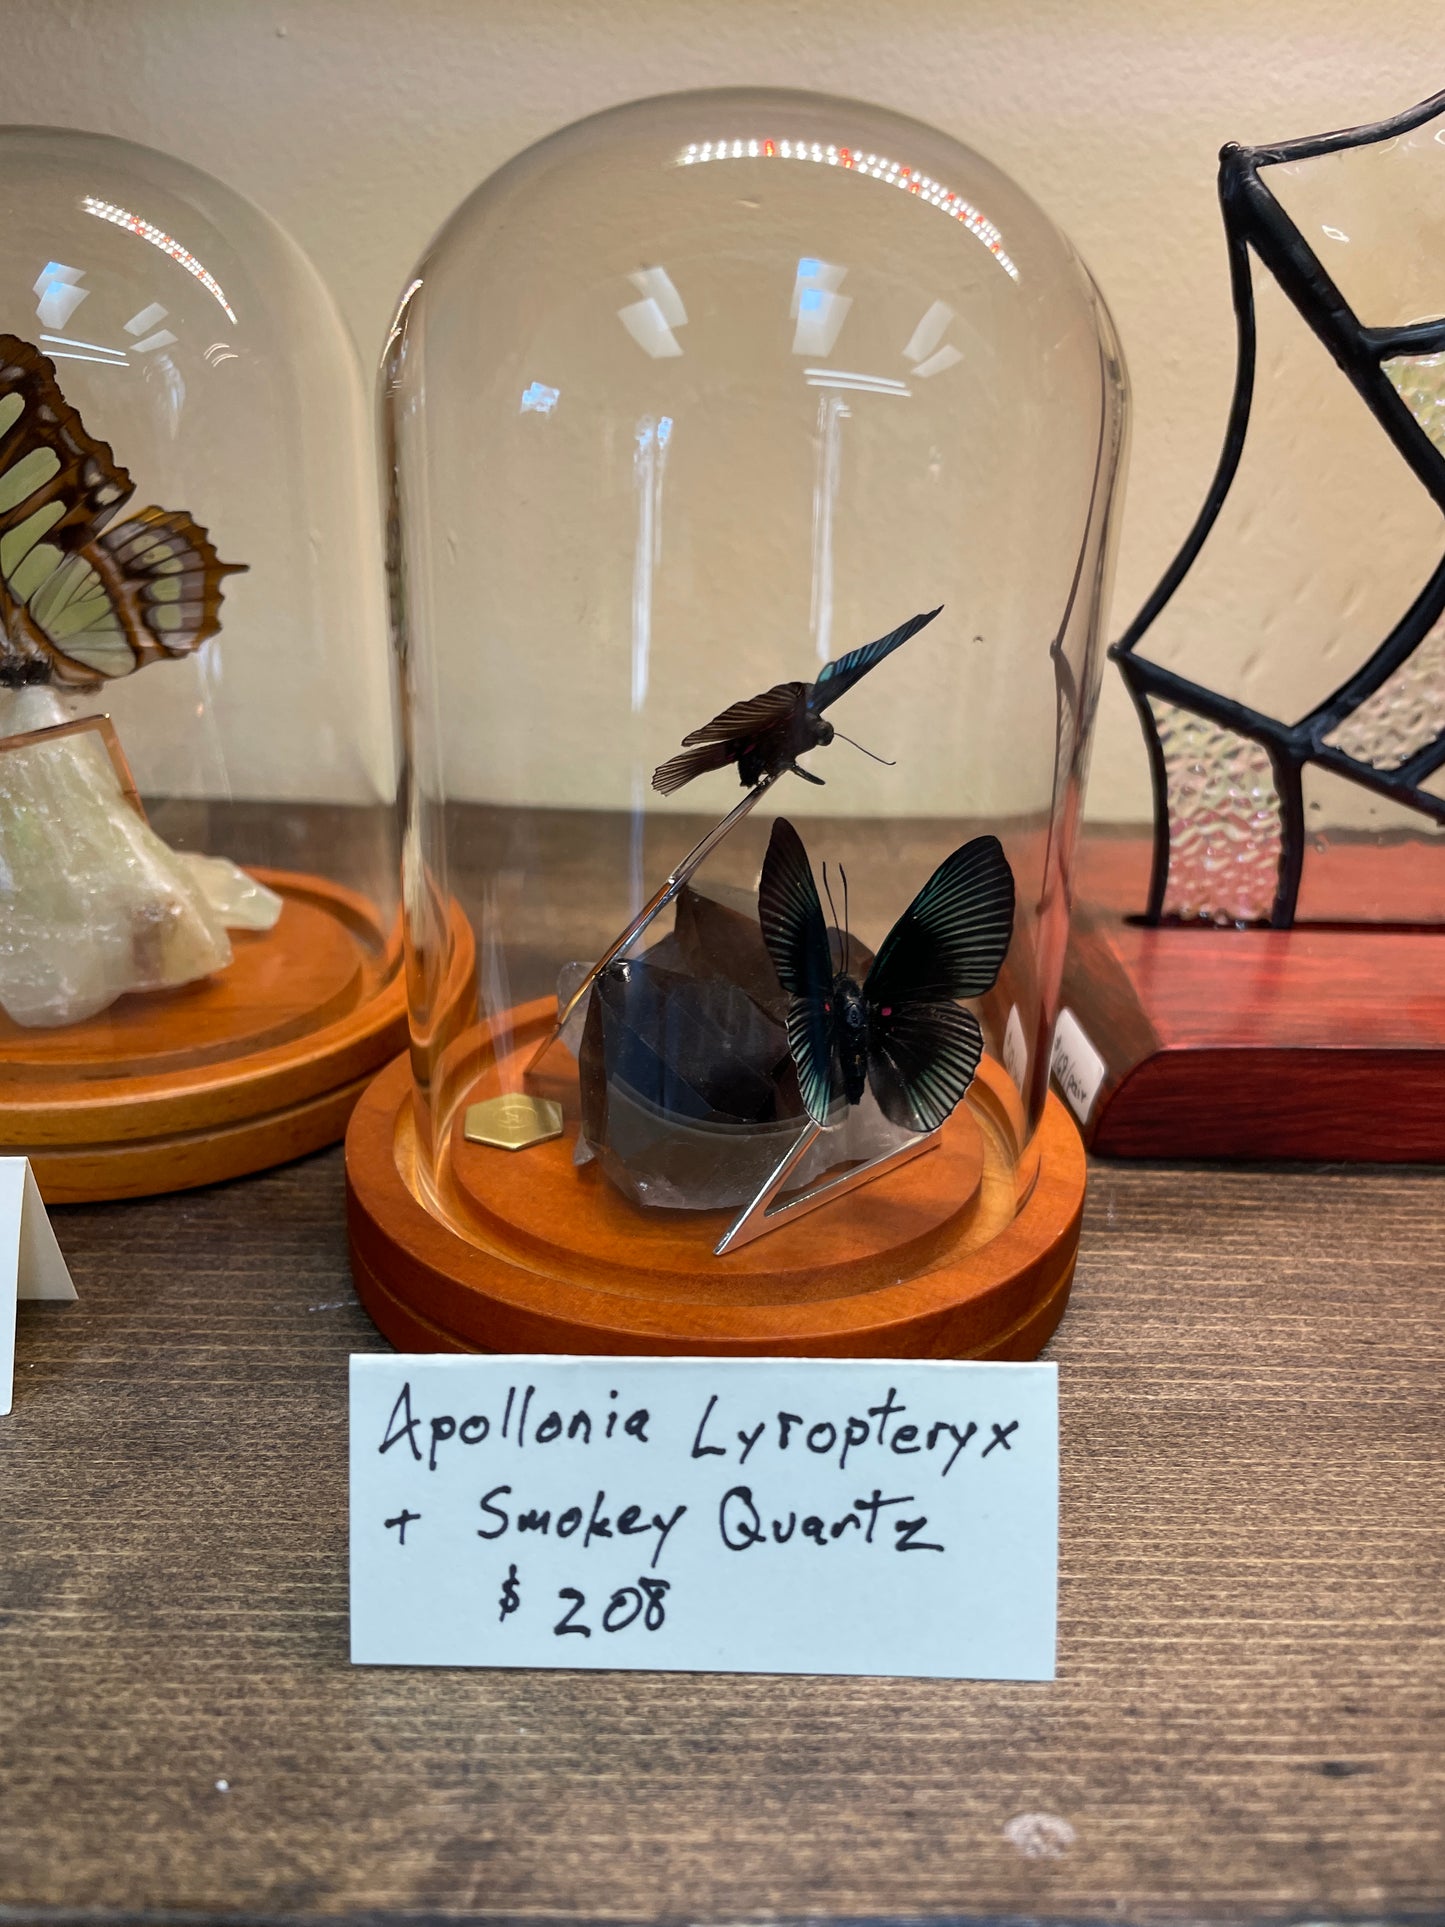 Apollonian Lyropteryx + Smokey quartz - Decayed Brocade